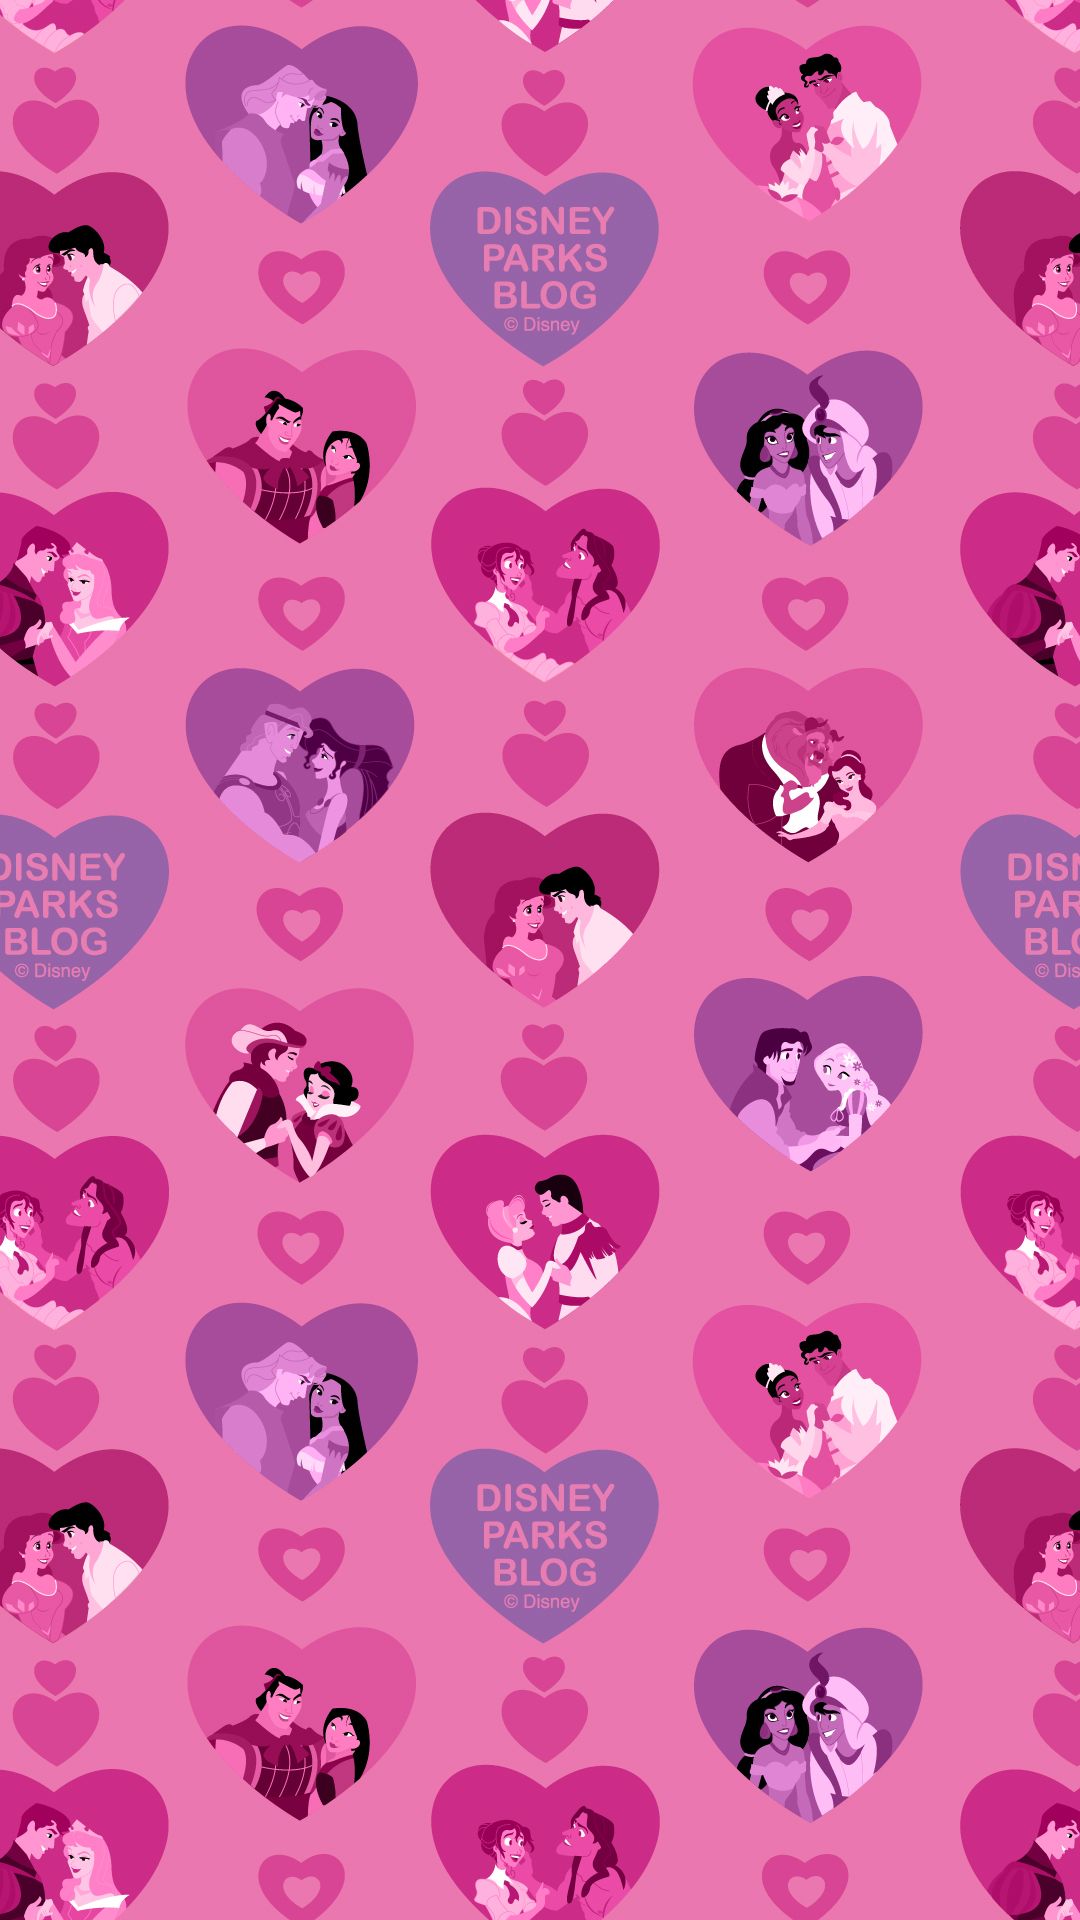 Disney Love Wallpapers